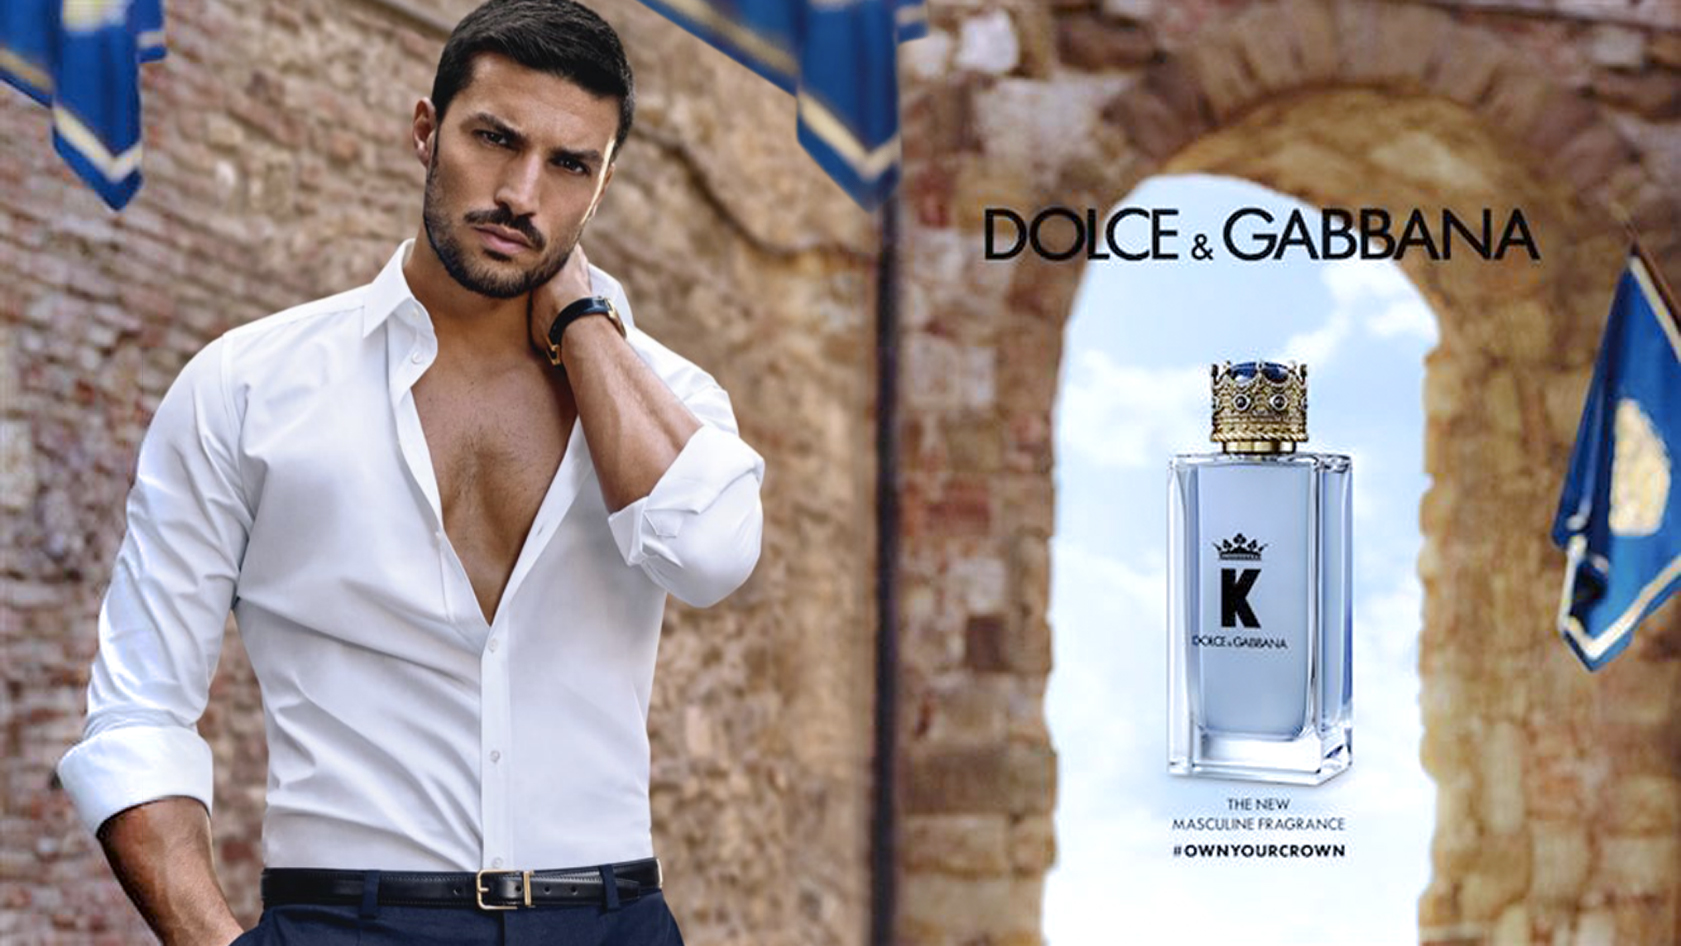 dolce and gabbana perfume male model